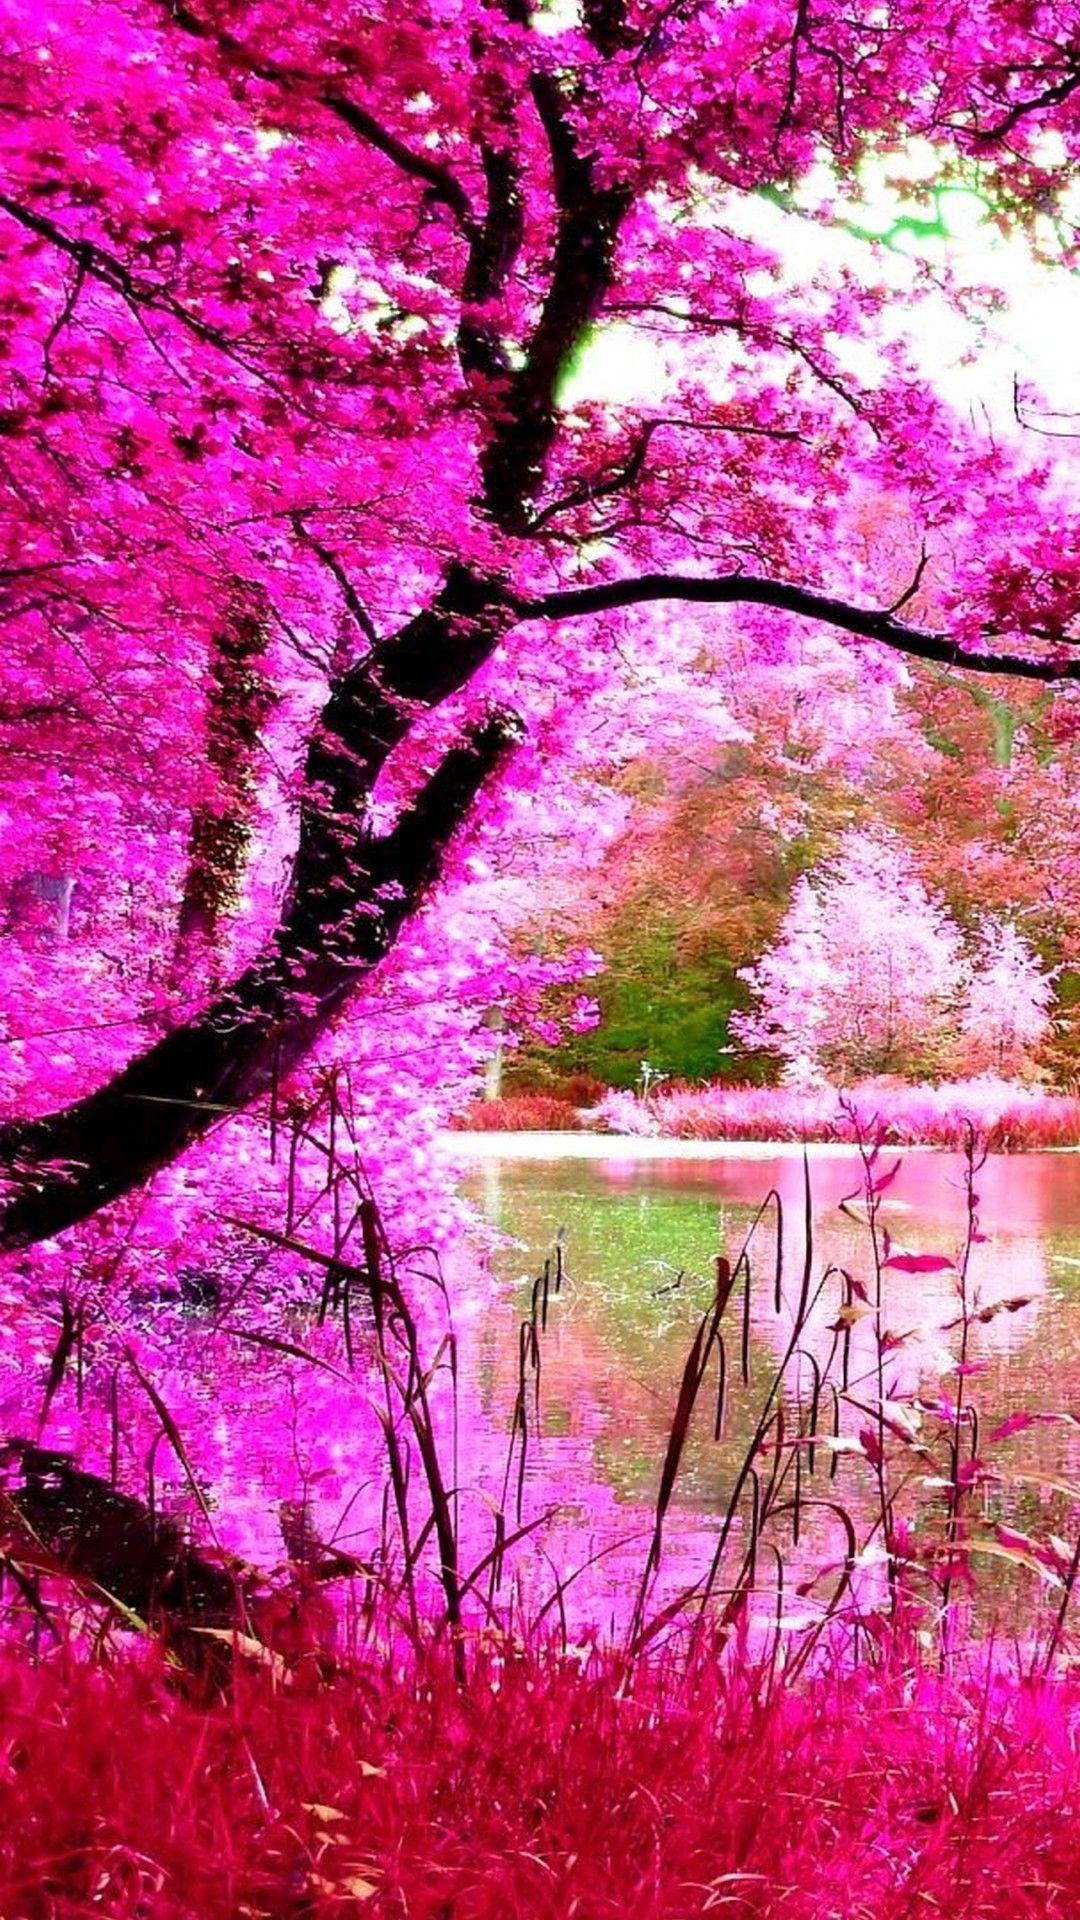 Beautiful Pink Nature iPhone Wallpaper. Nature iphone